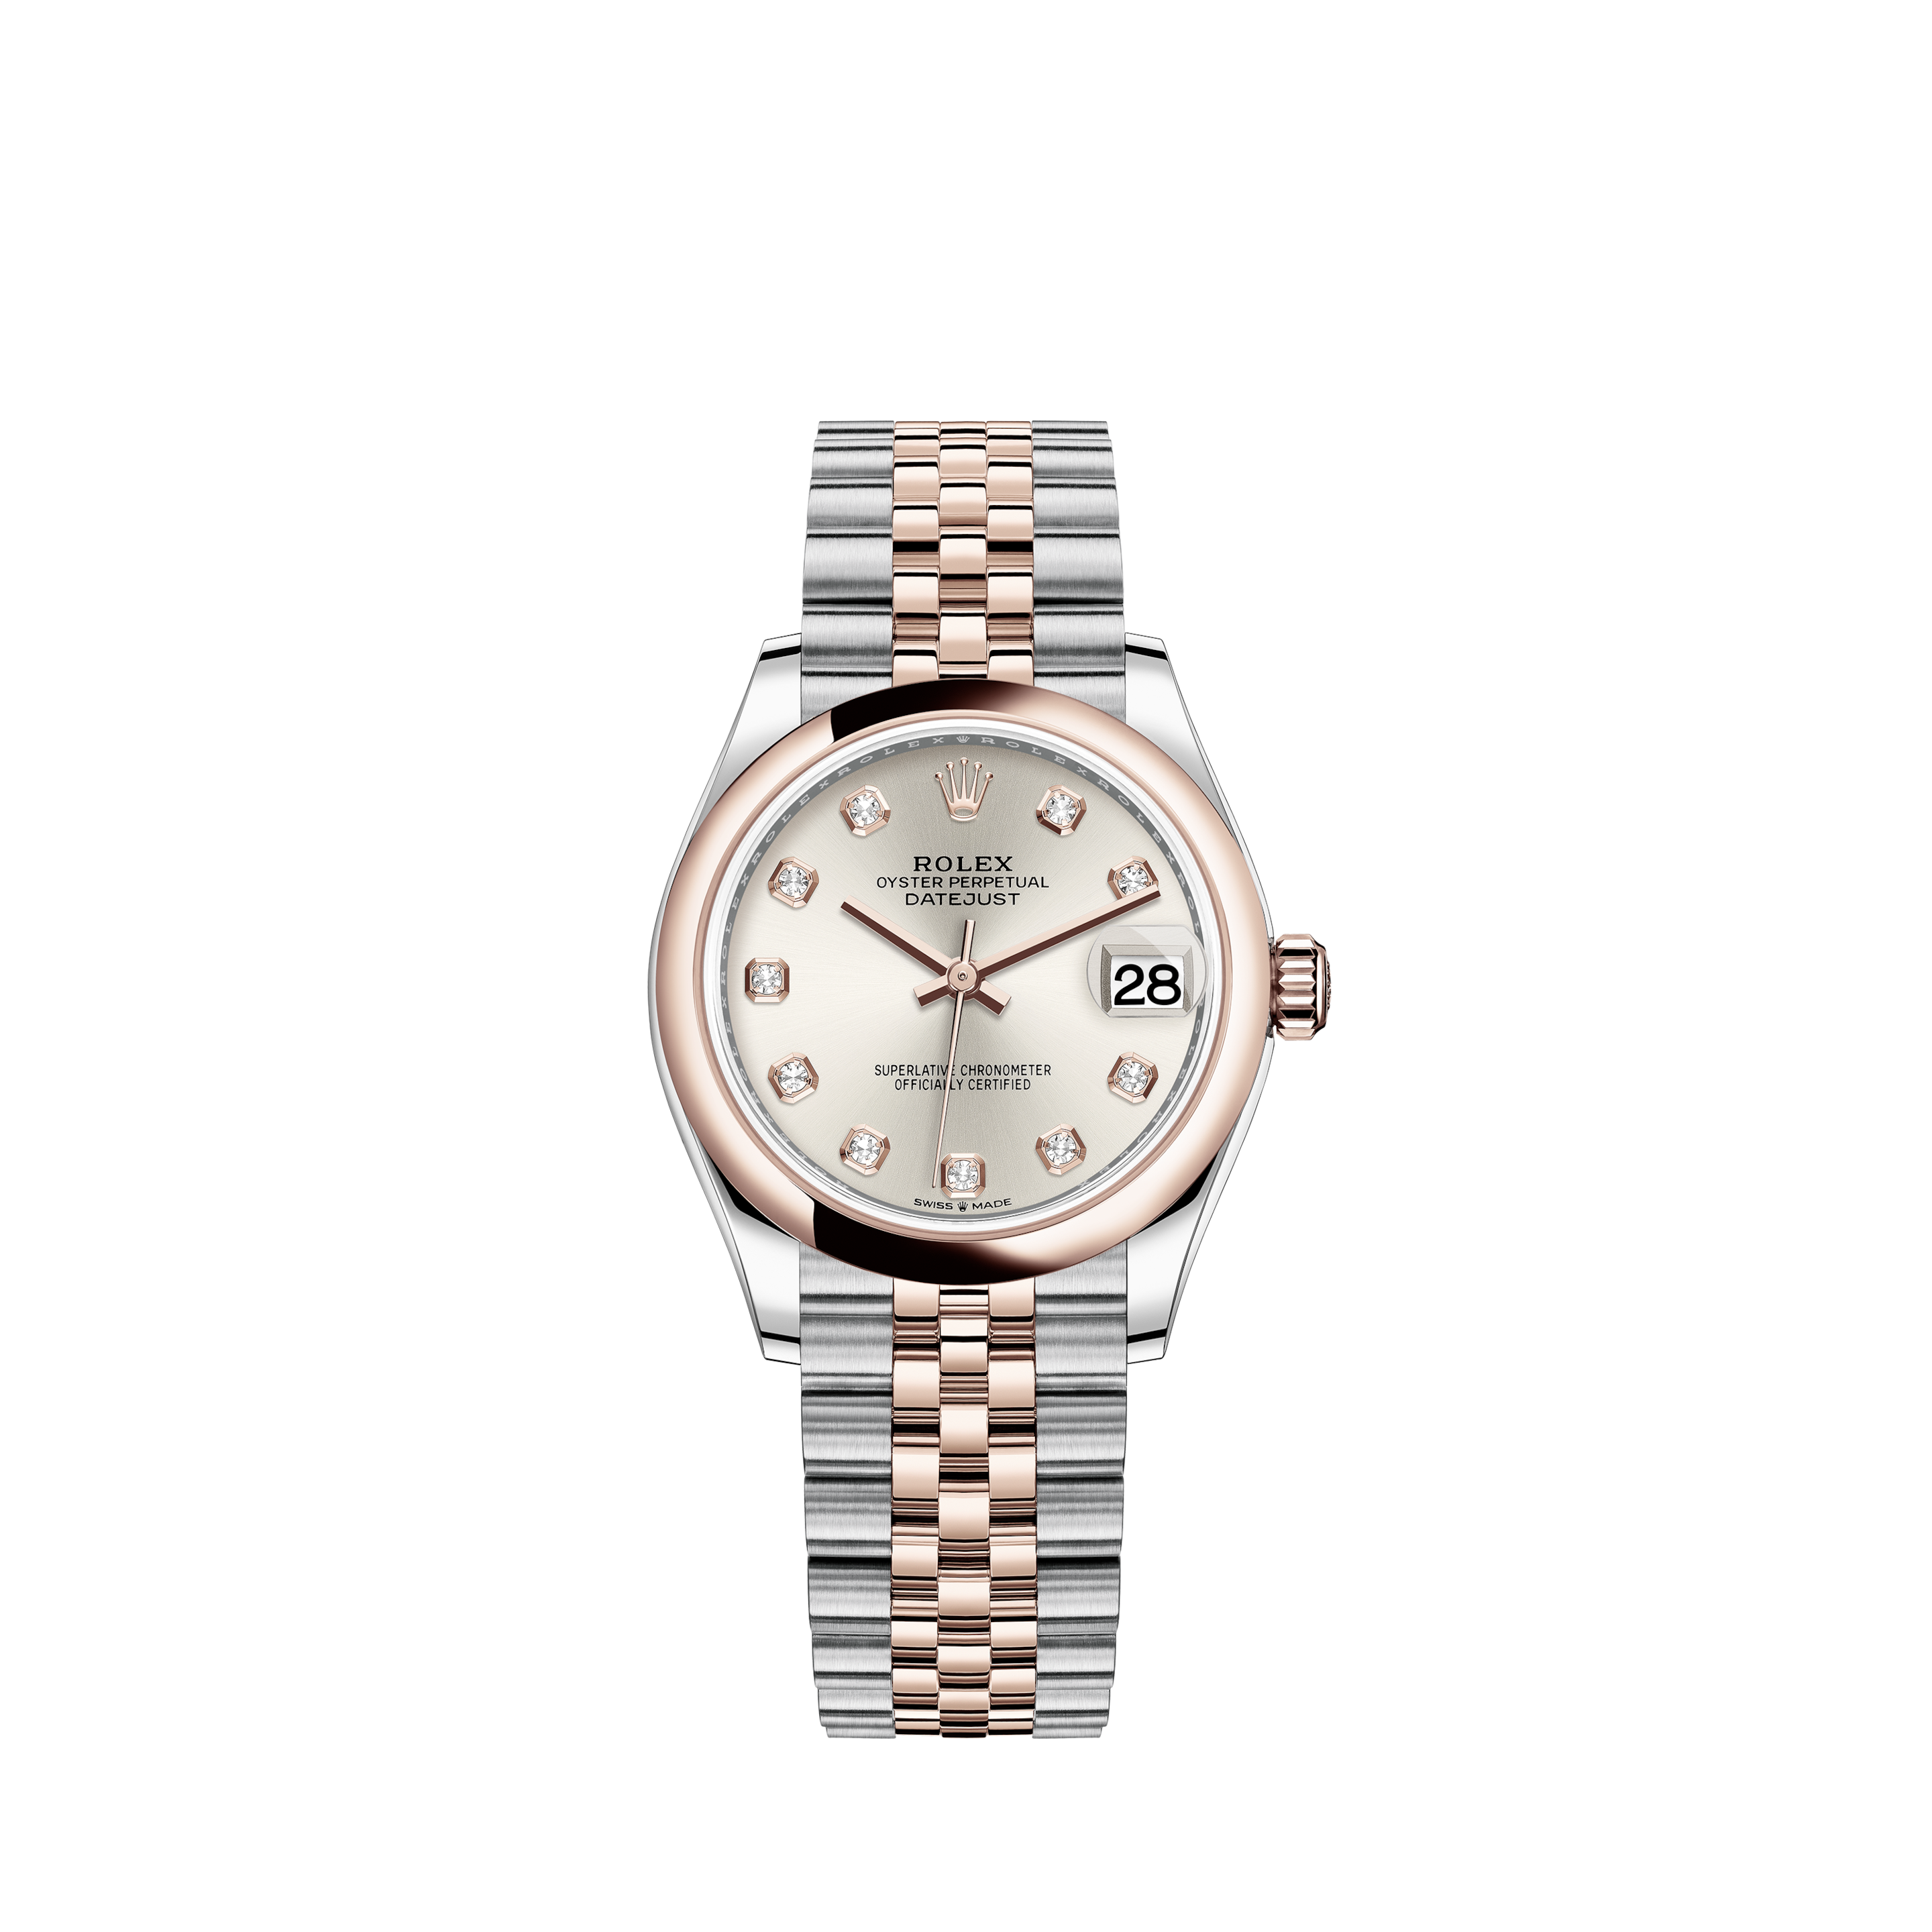 Rolex Datejust Men's Stainless Steel Oyster Watch 116234